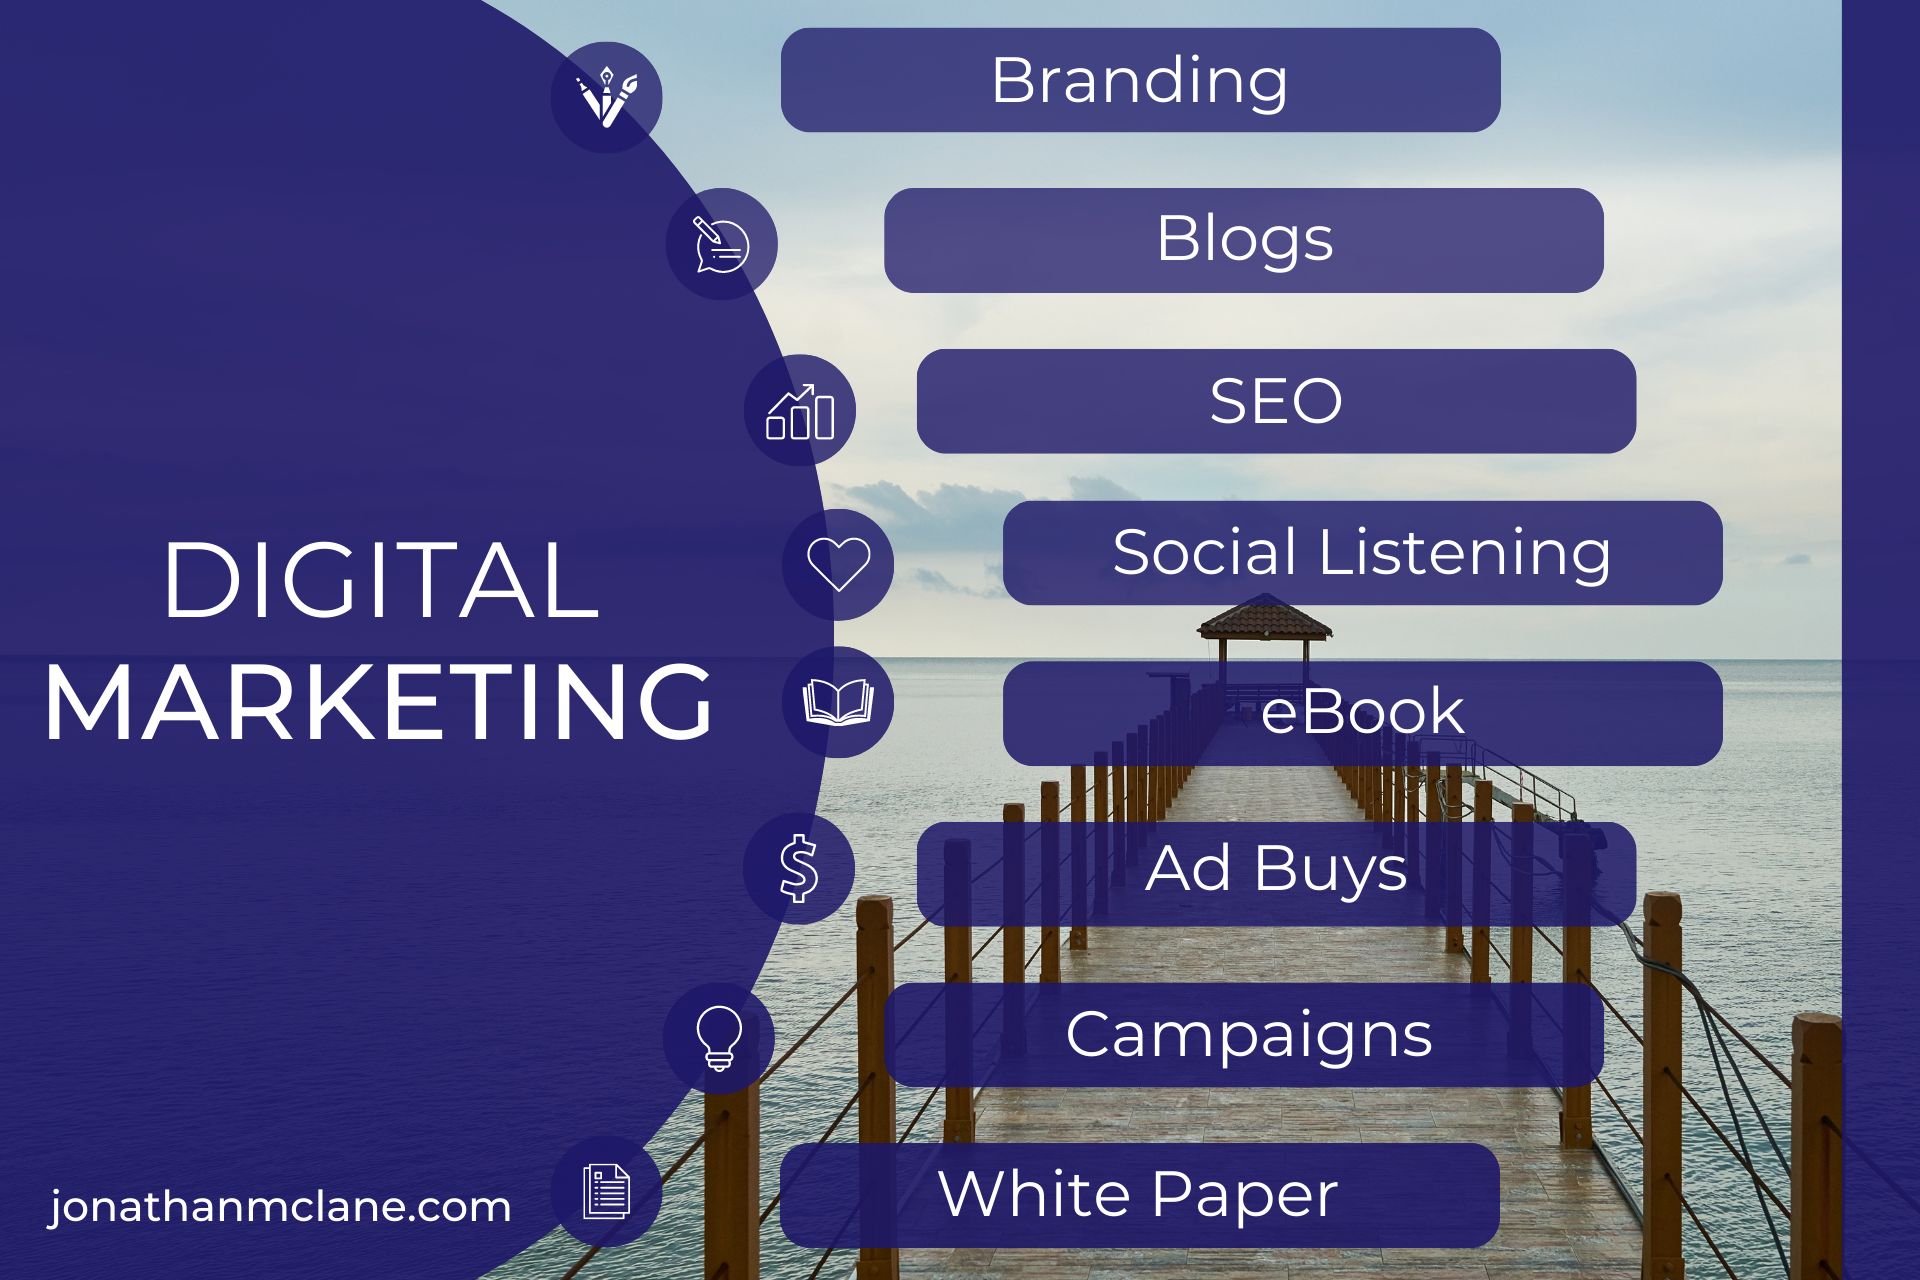 Digital Marketing, Branding, Blogs, SEO, Social Listening, eBook, Ad Buys, Campaigns, White Paper